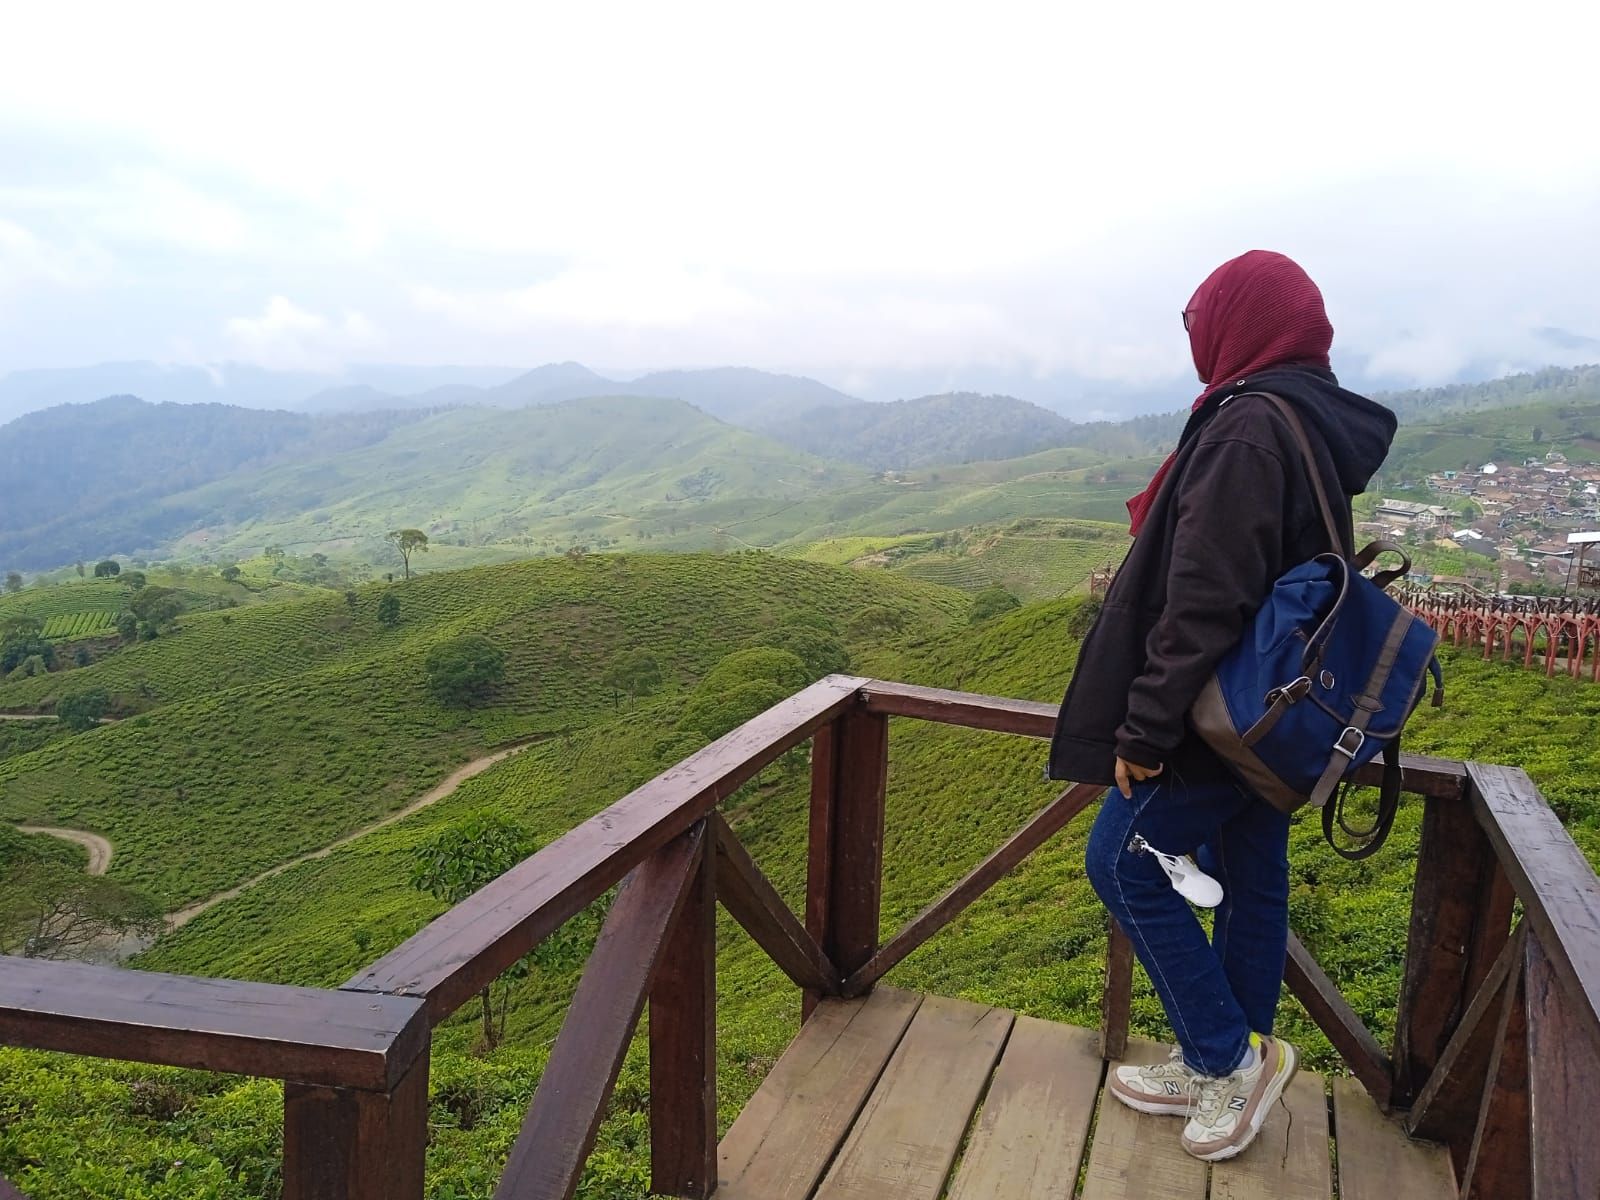 Tempat wisata Taman Langit Pangalengan Bandung.